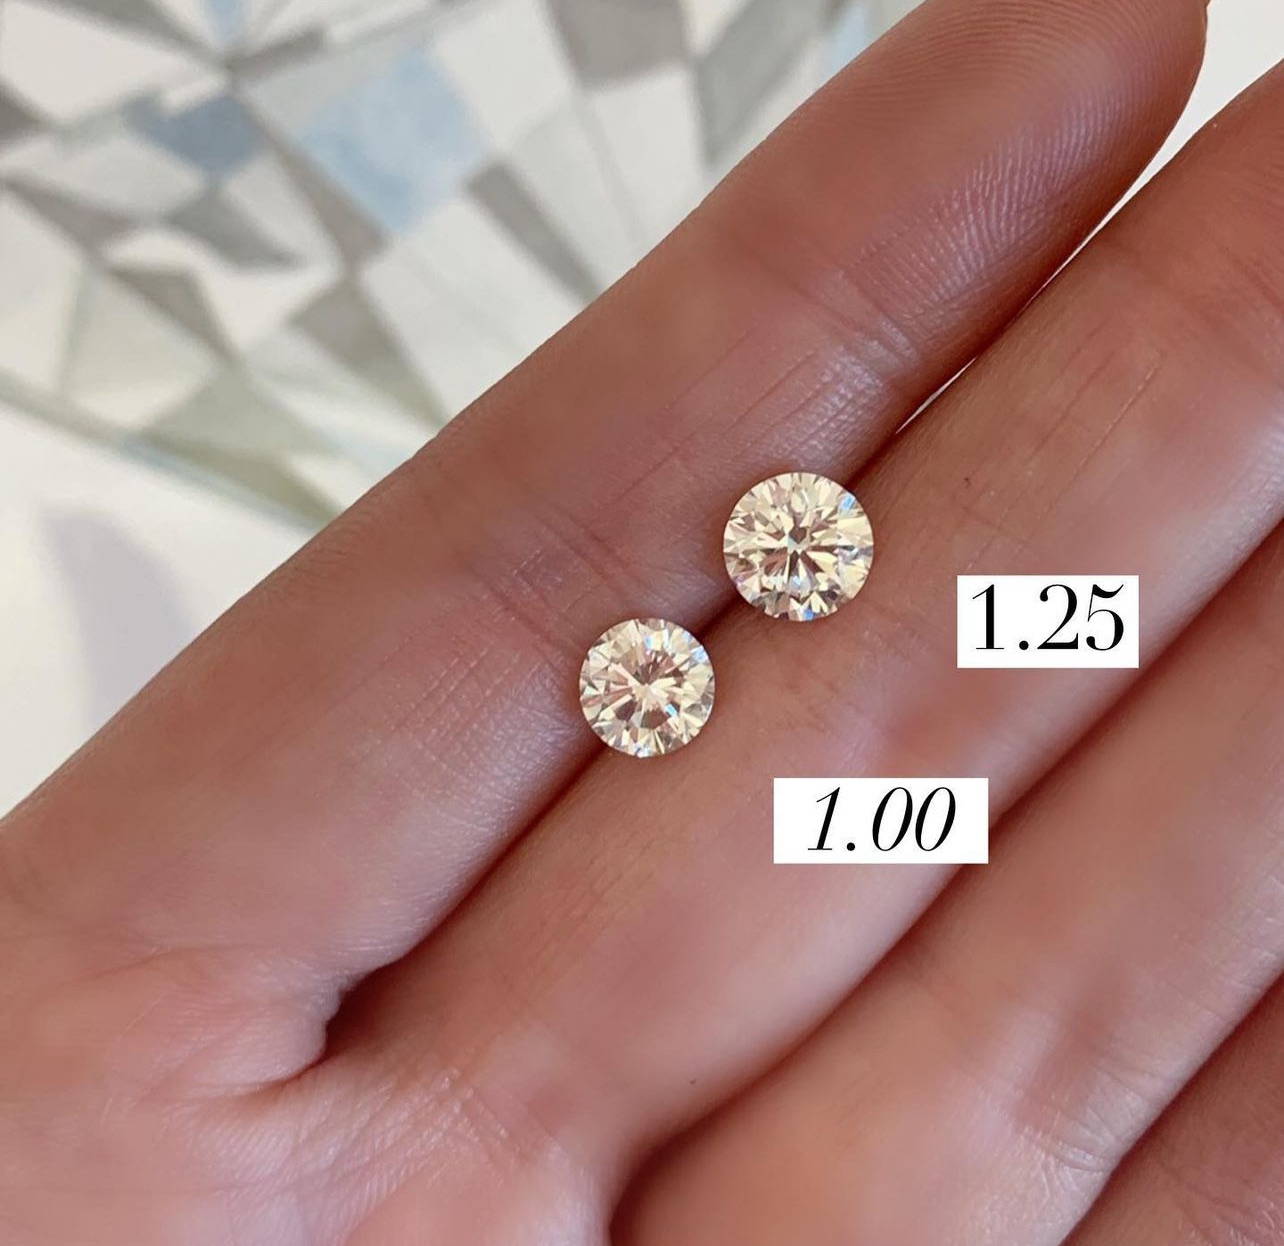 round diamond carat sizes on a hand - 1 carat vs 1.25 carat